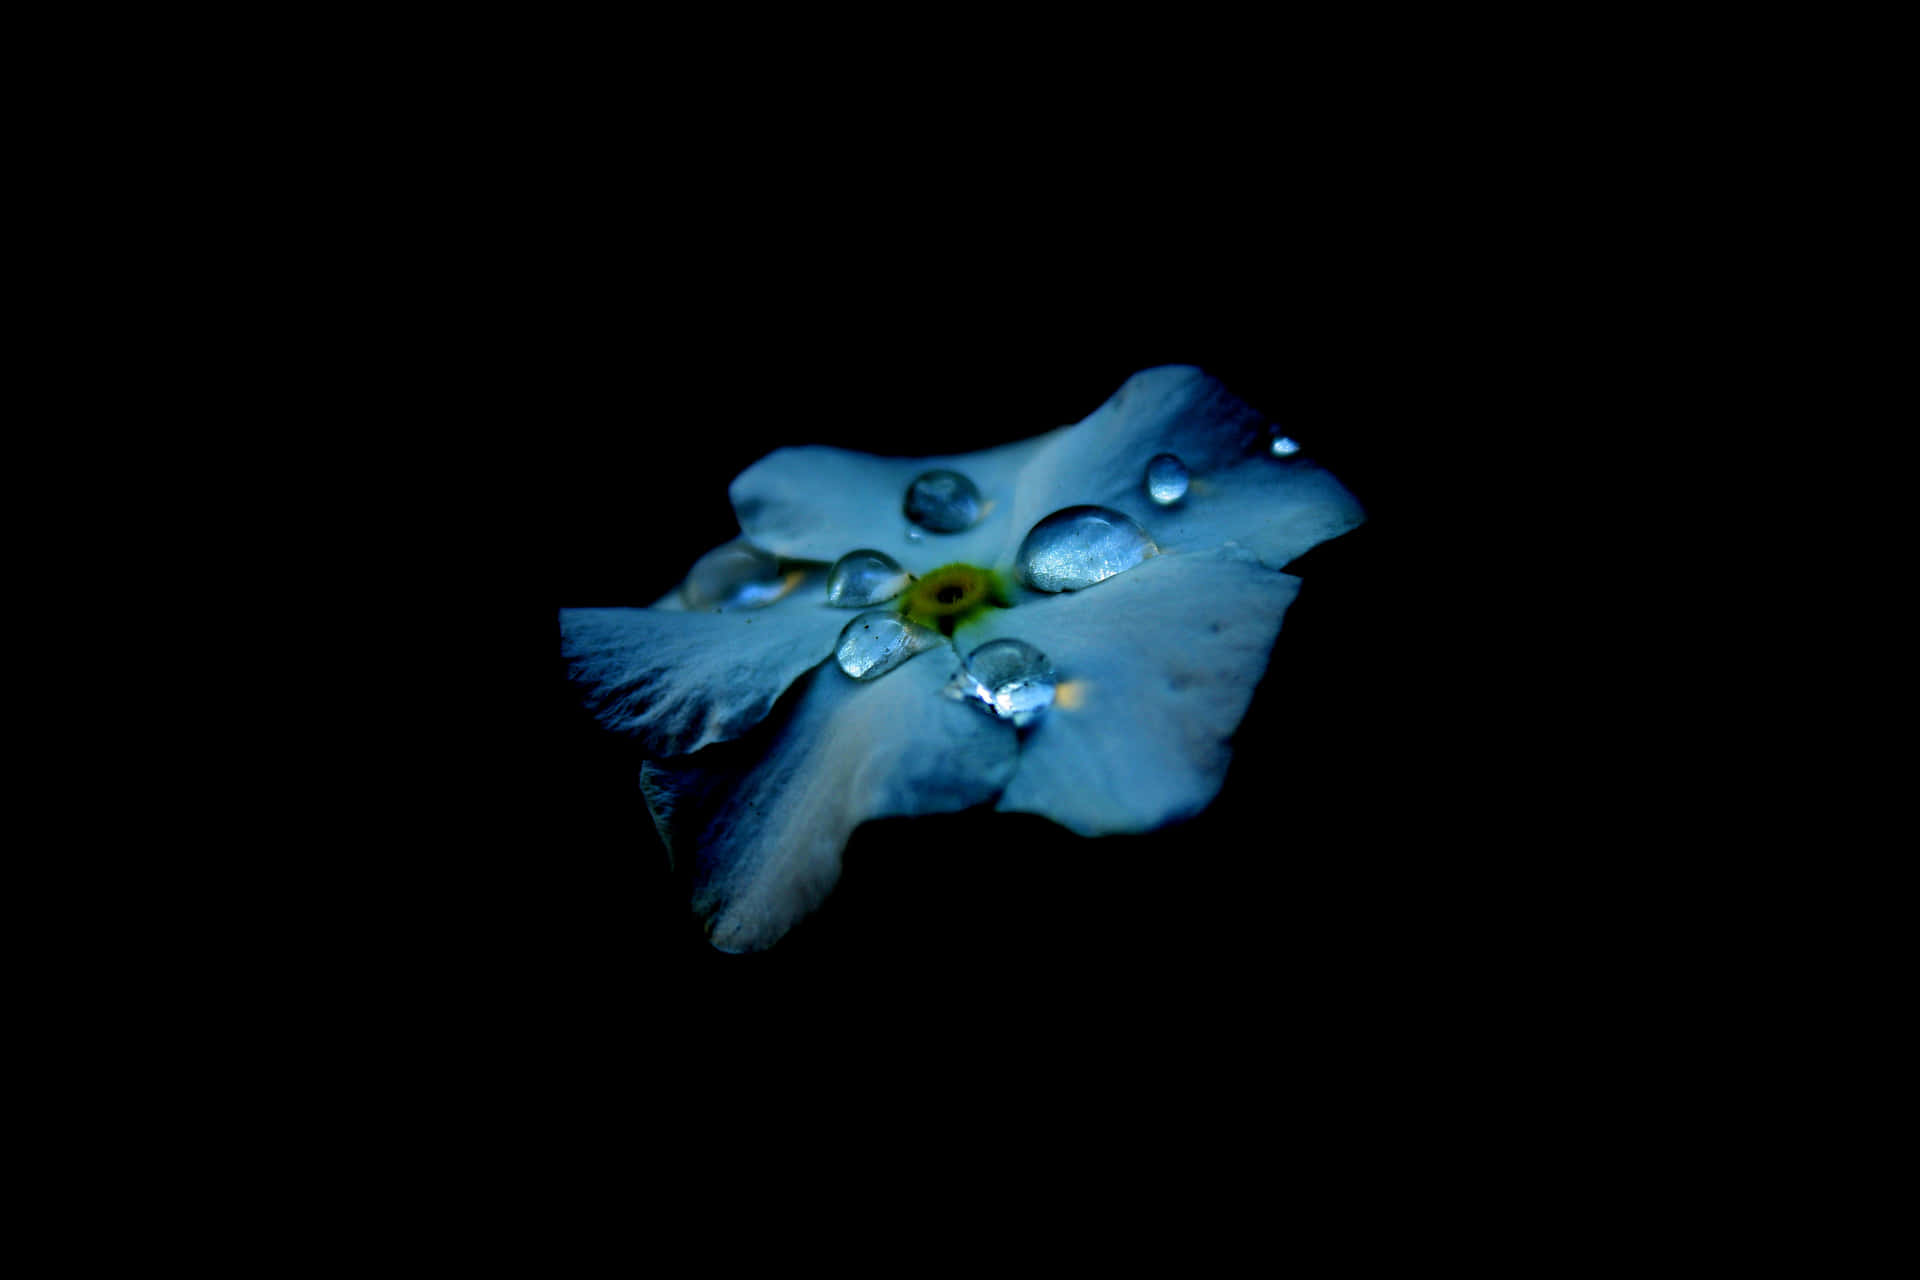 Amoled Laptop Water Droplets On Blue Flower Wallpaper